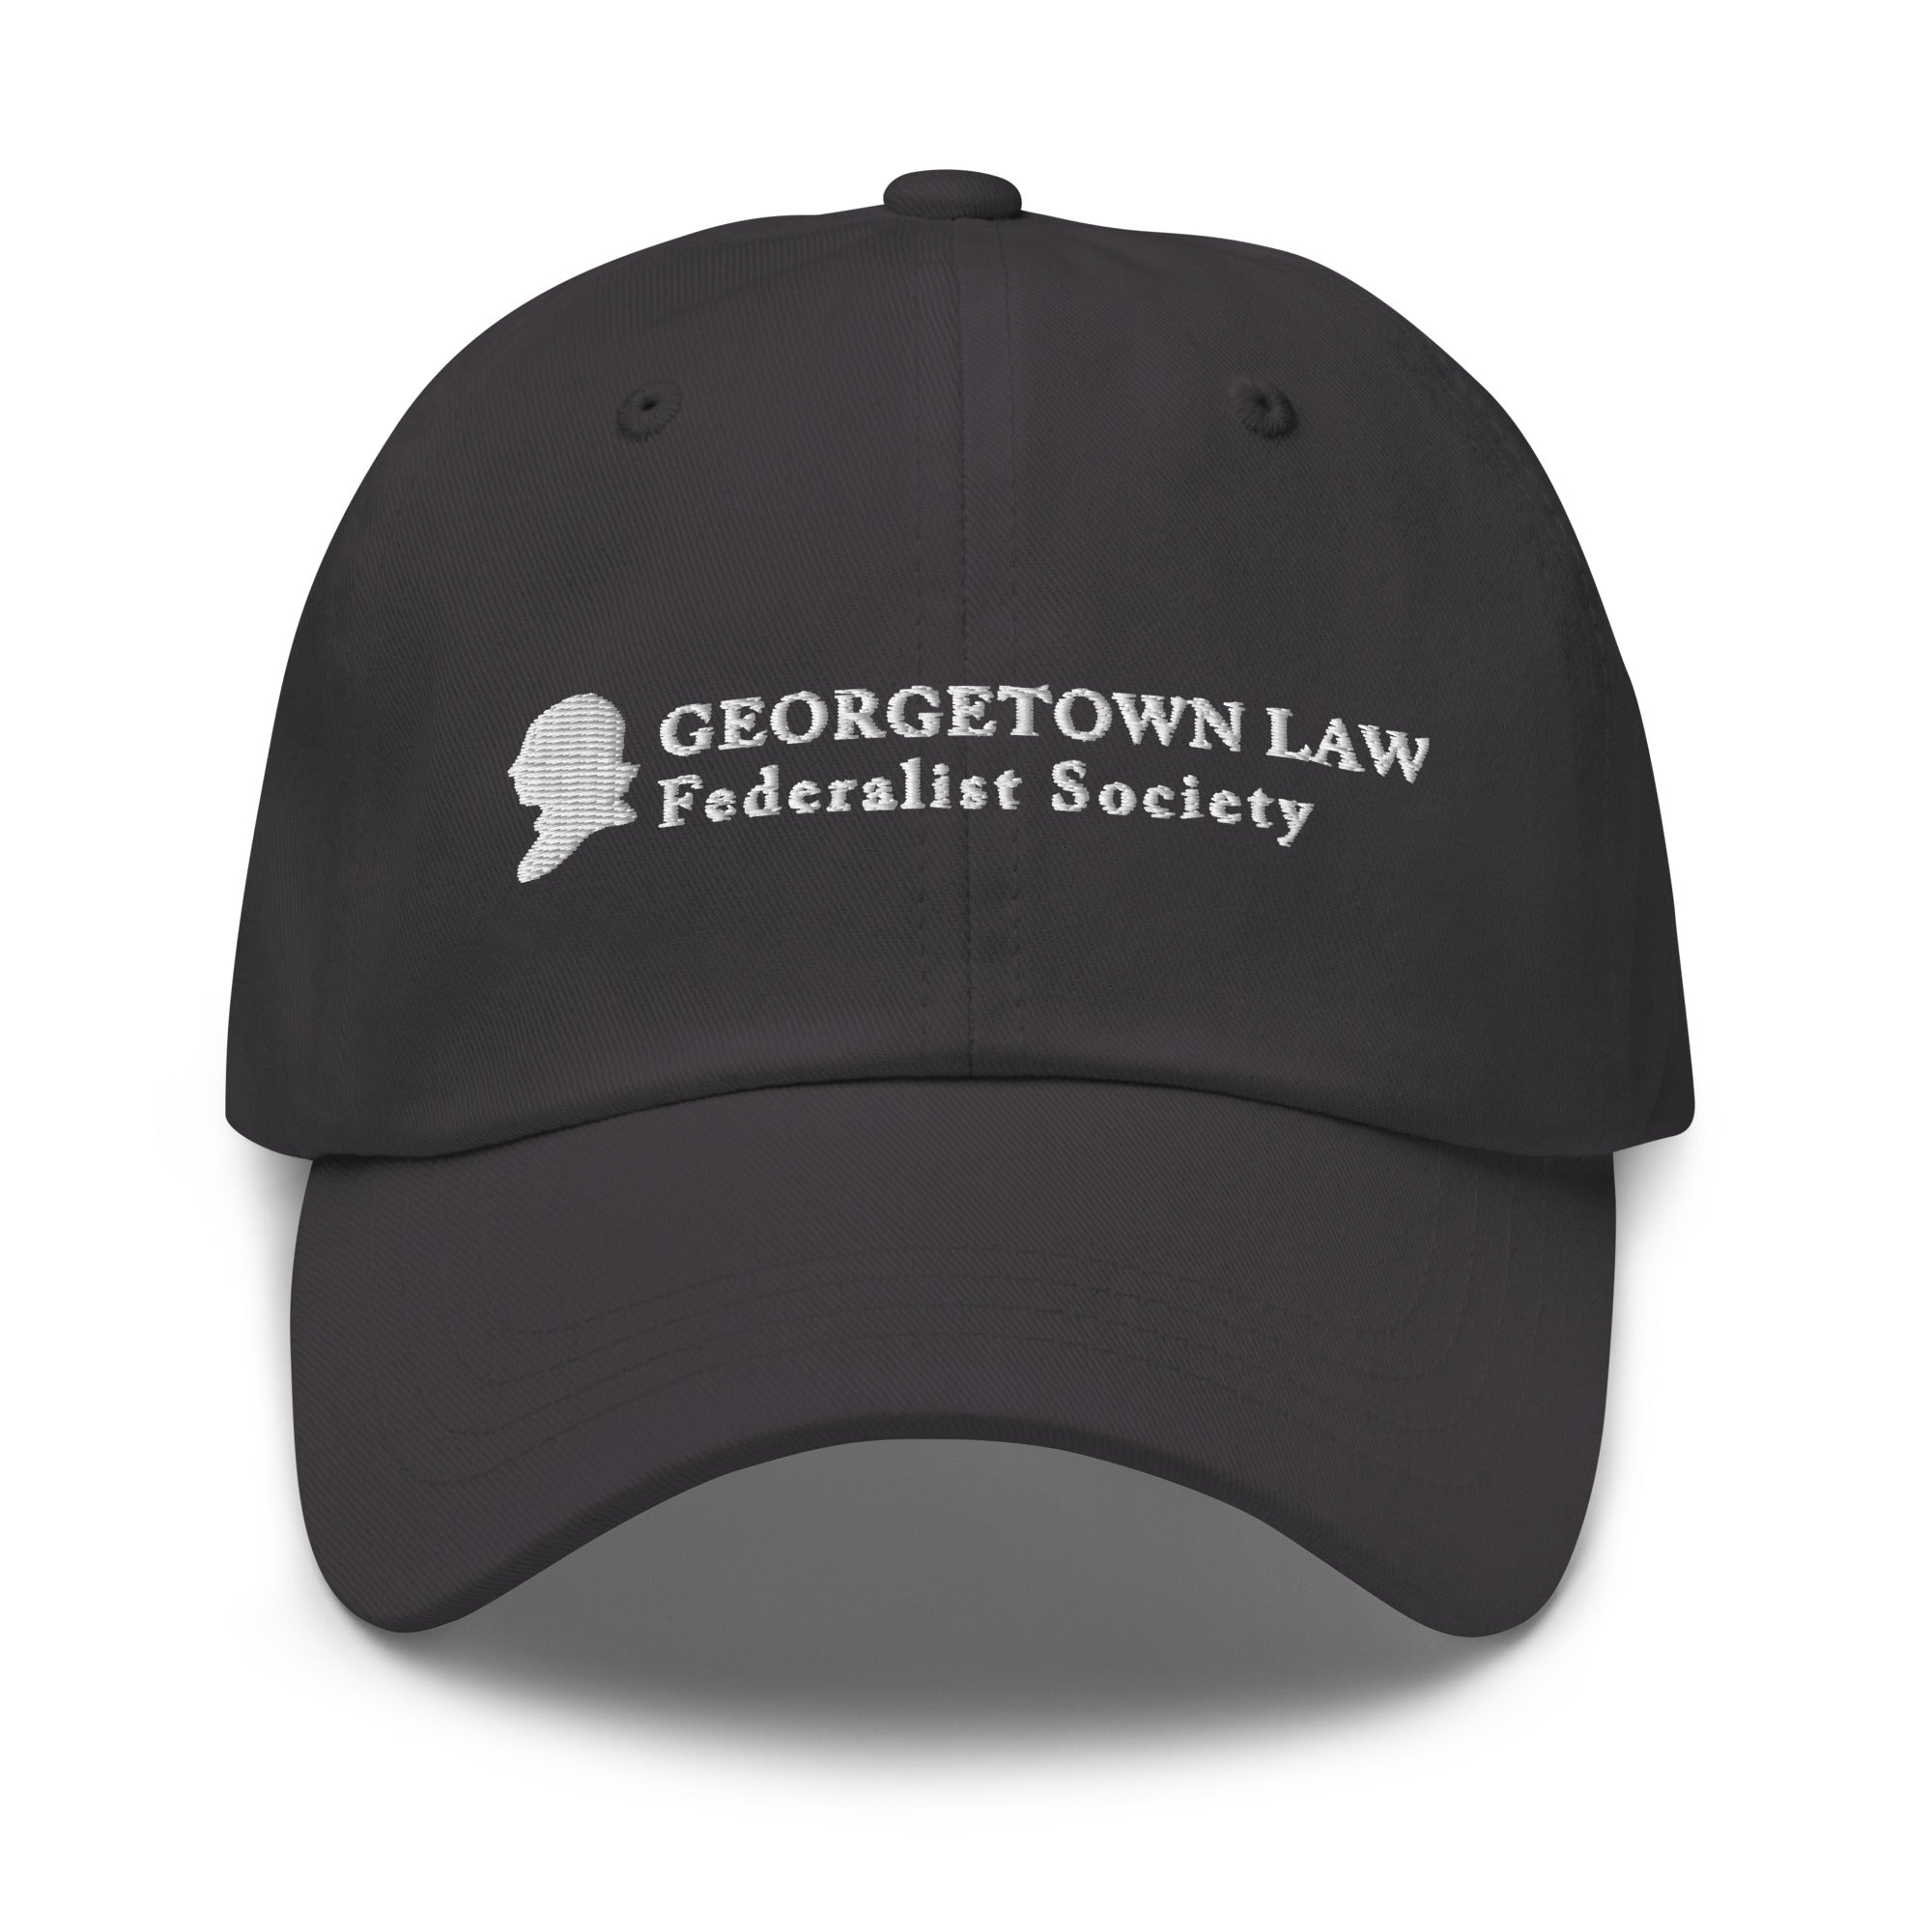 Gray Hat (Georgetown Law Fed Soc)